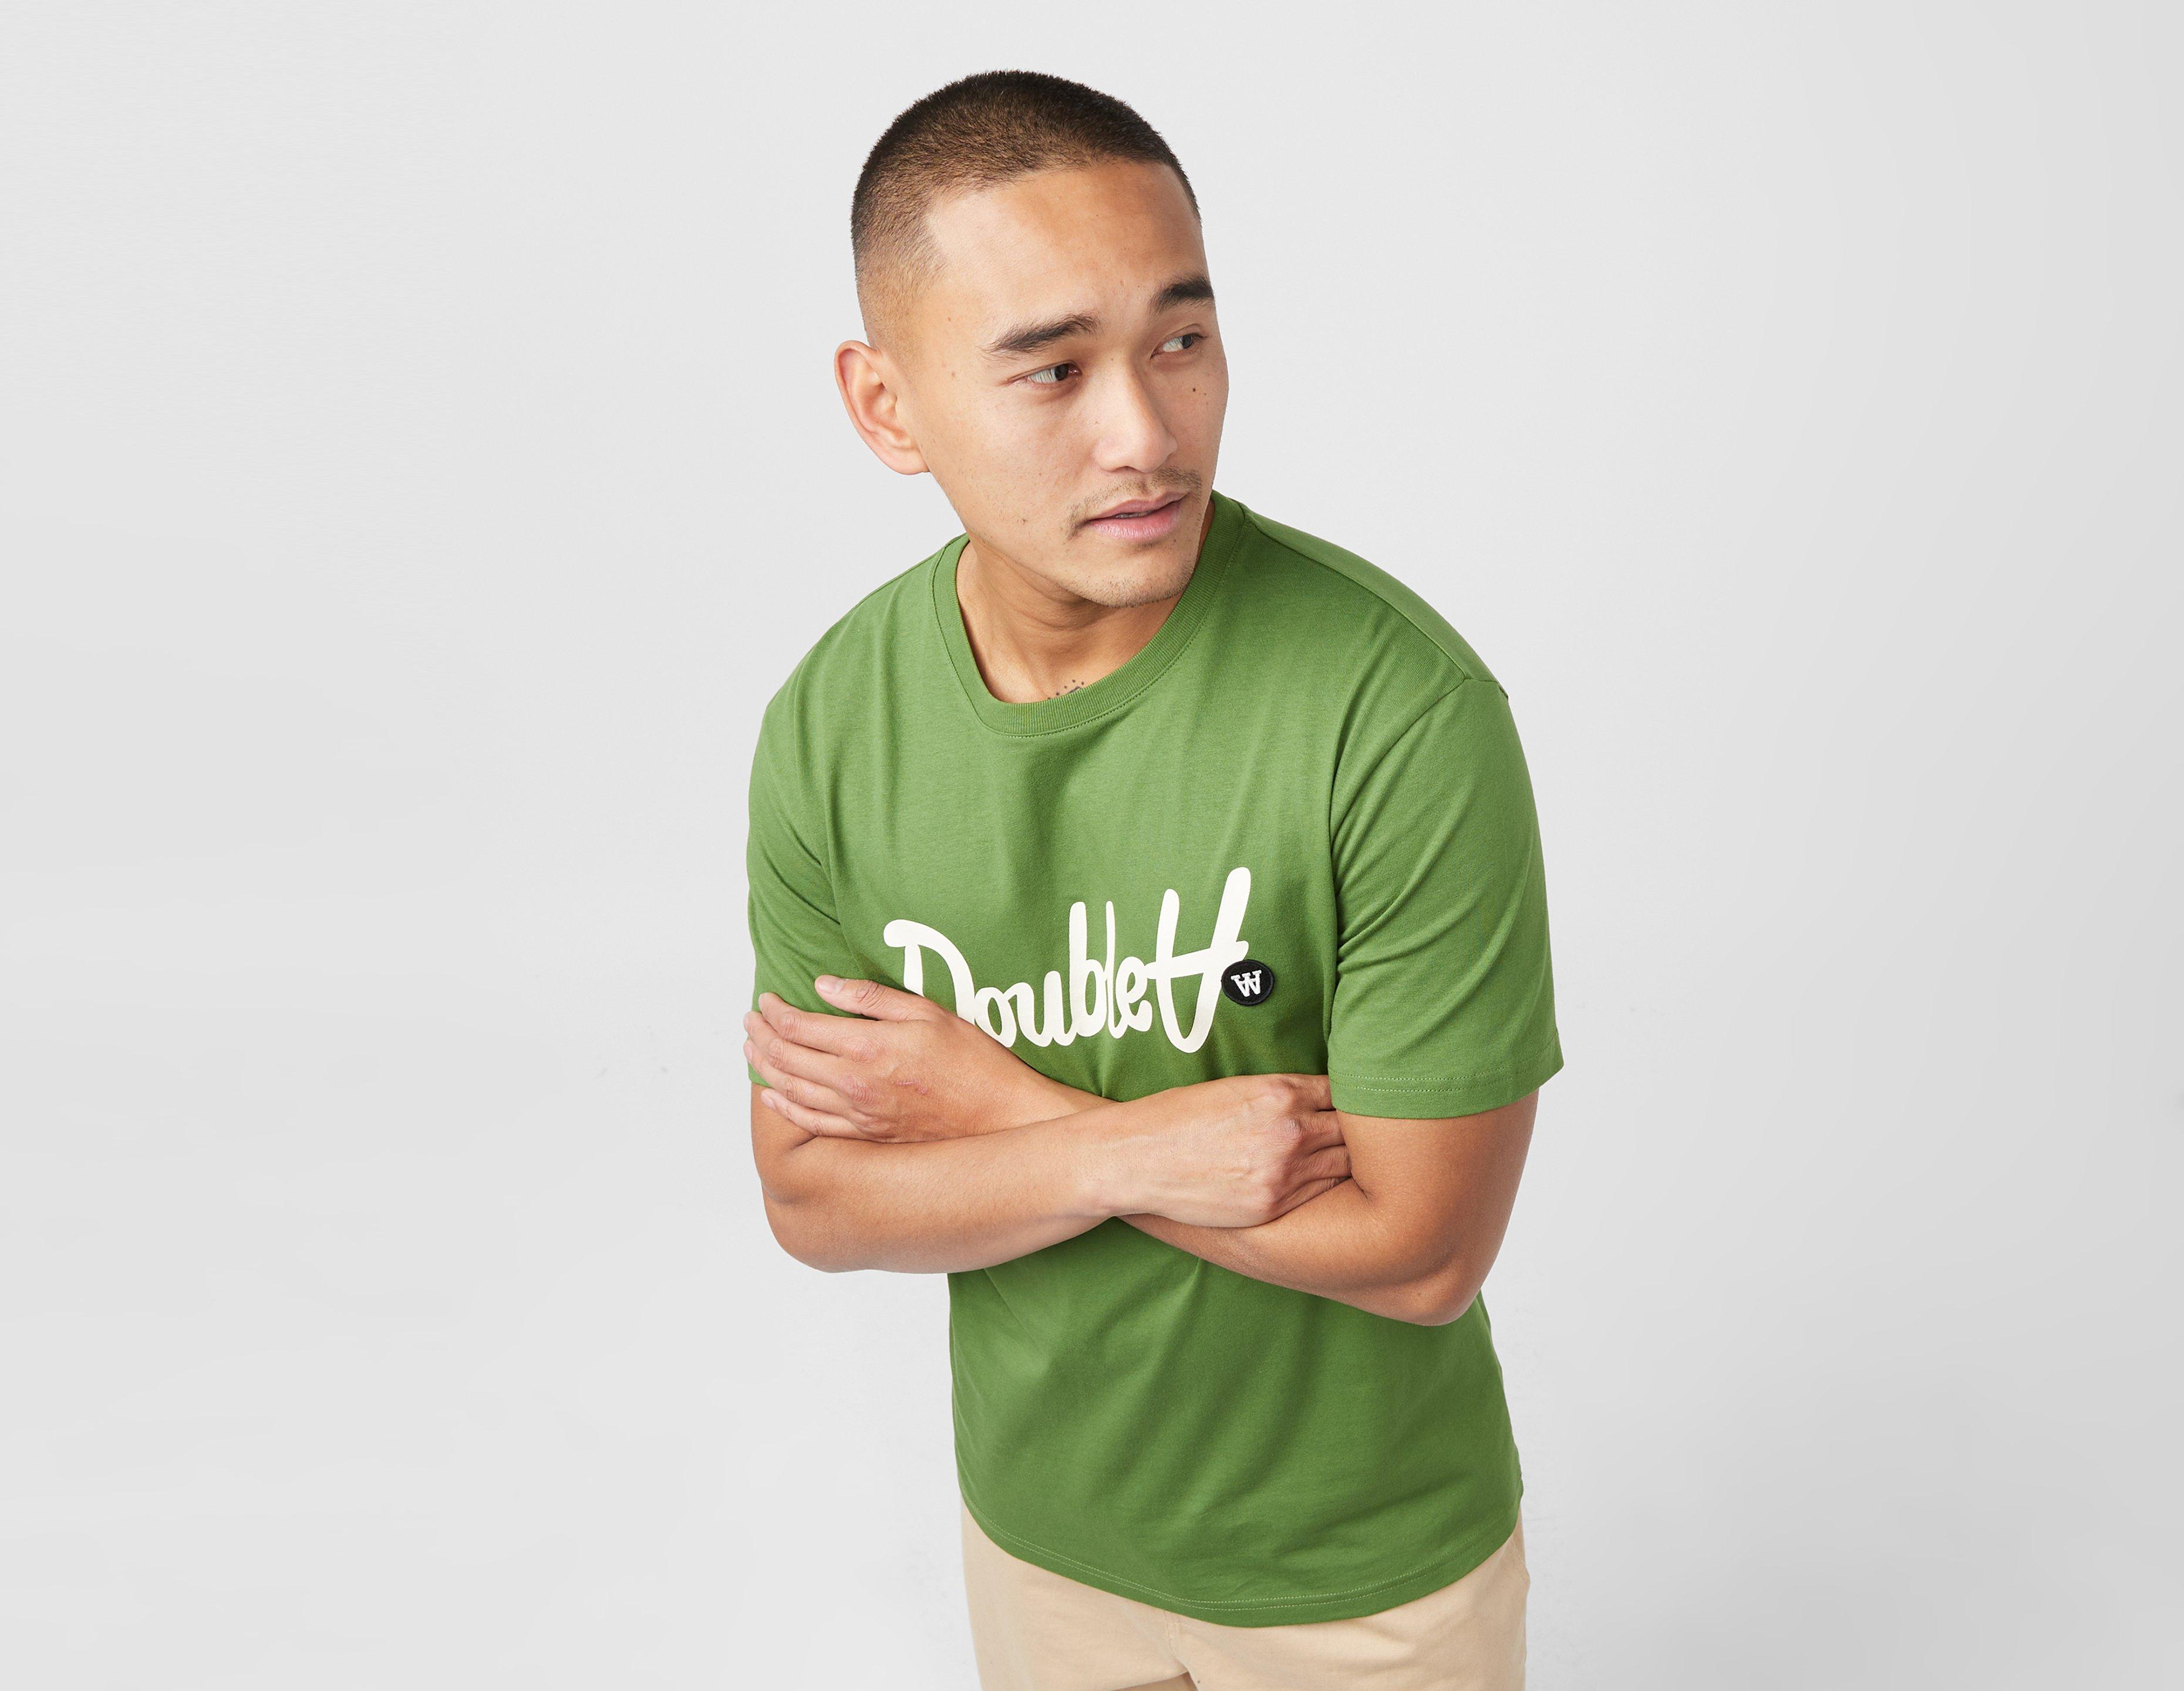 Klassic cotton sweatshirt Toni neutri - Trey Shirt - Green Double A by Wood  Wood Ace Script T | Healthdesign?